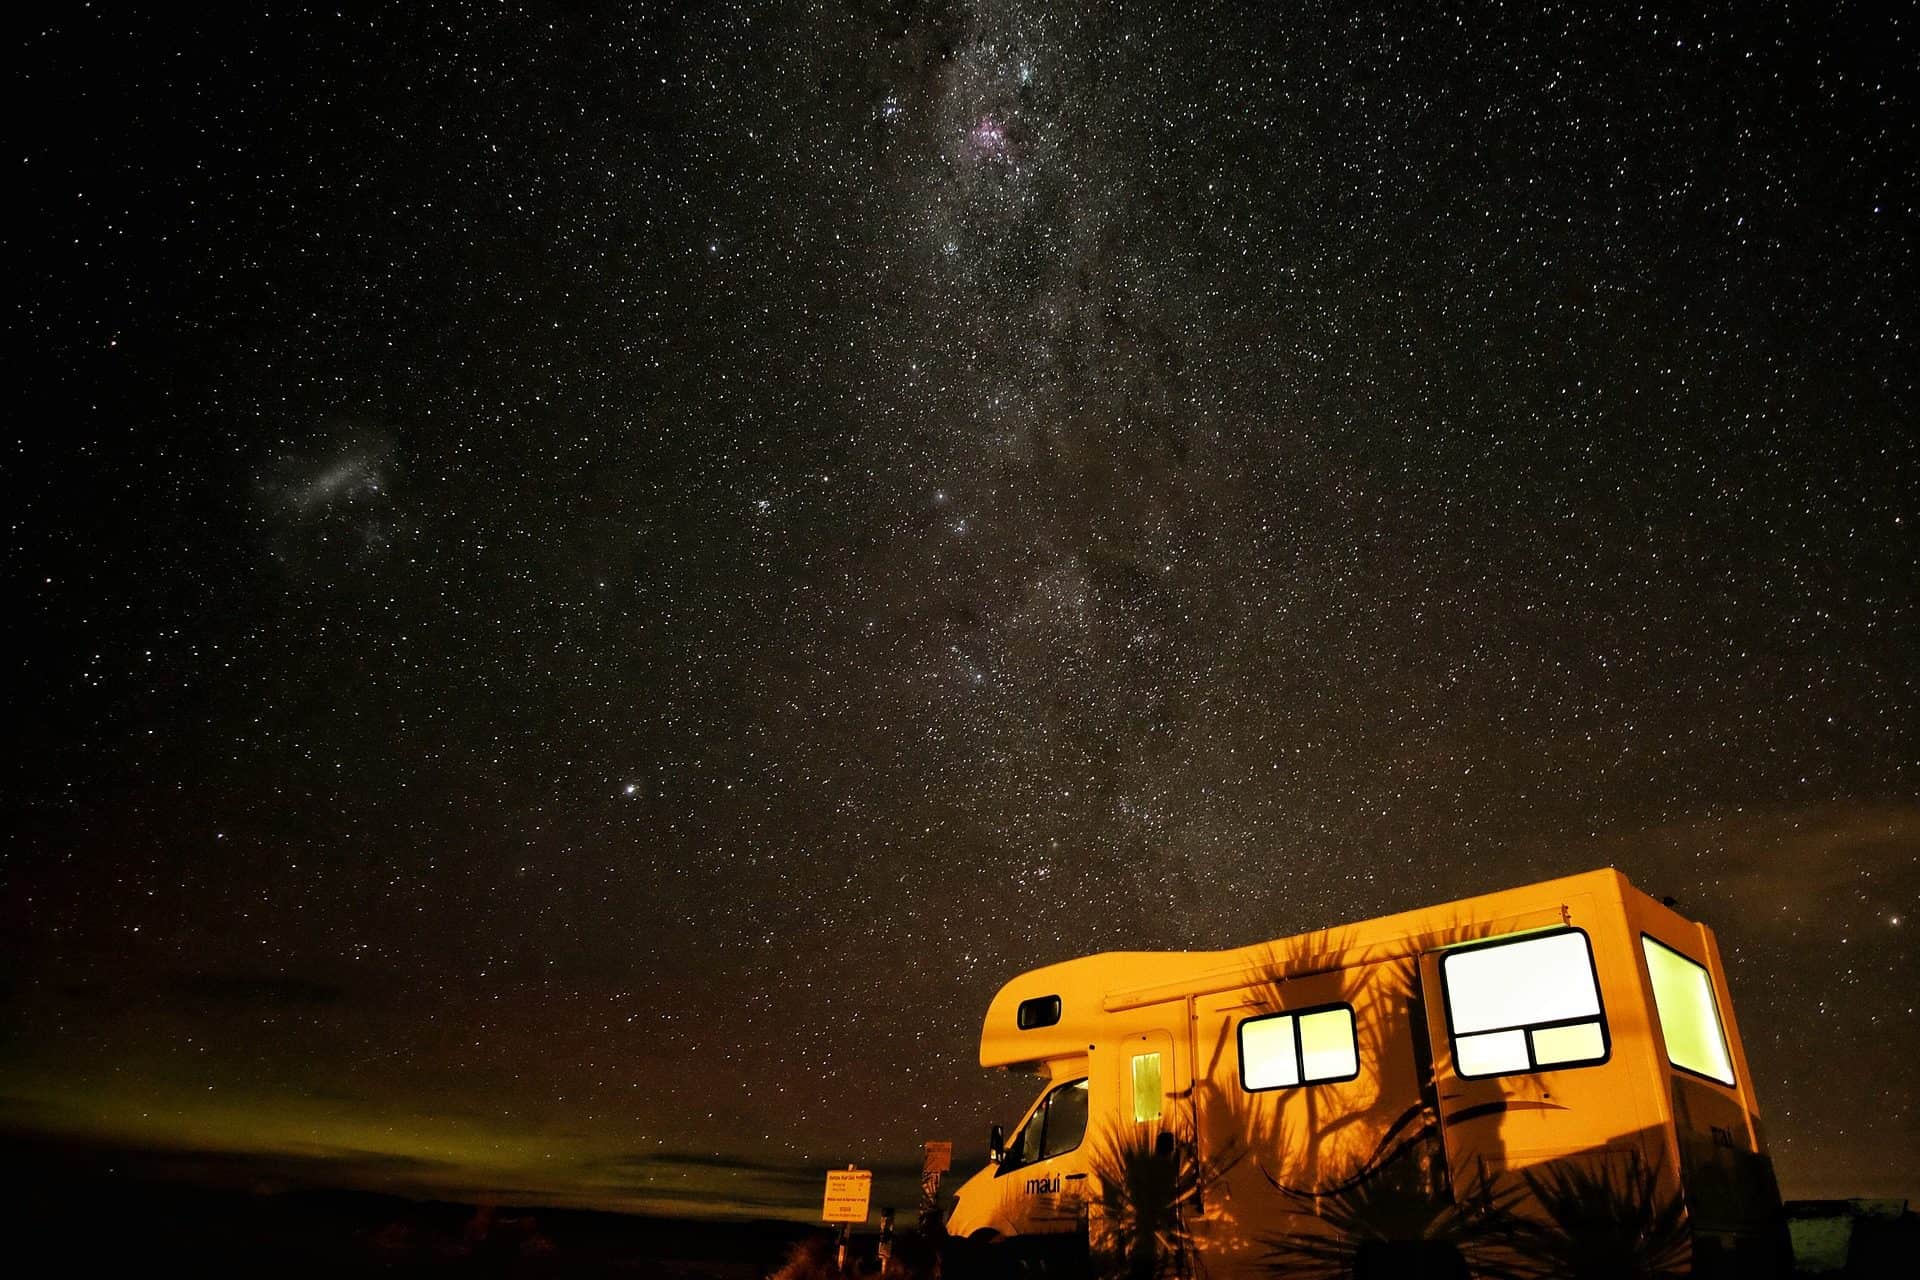 RV / Caravan parked under starry sky